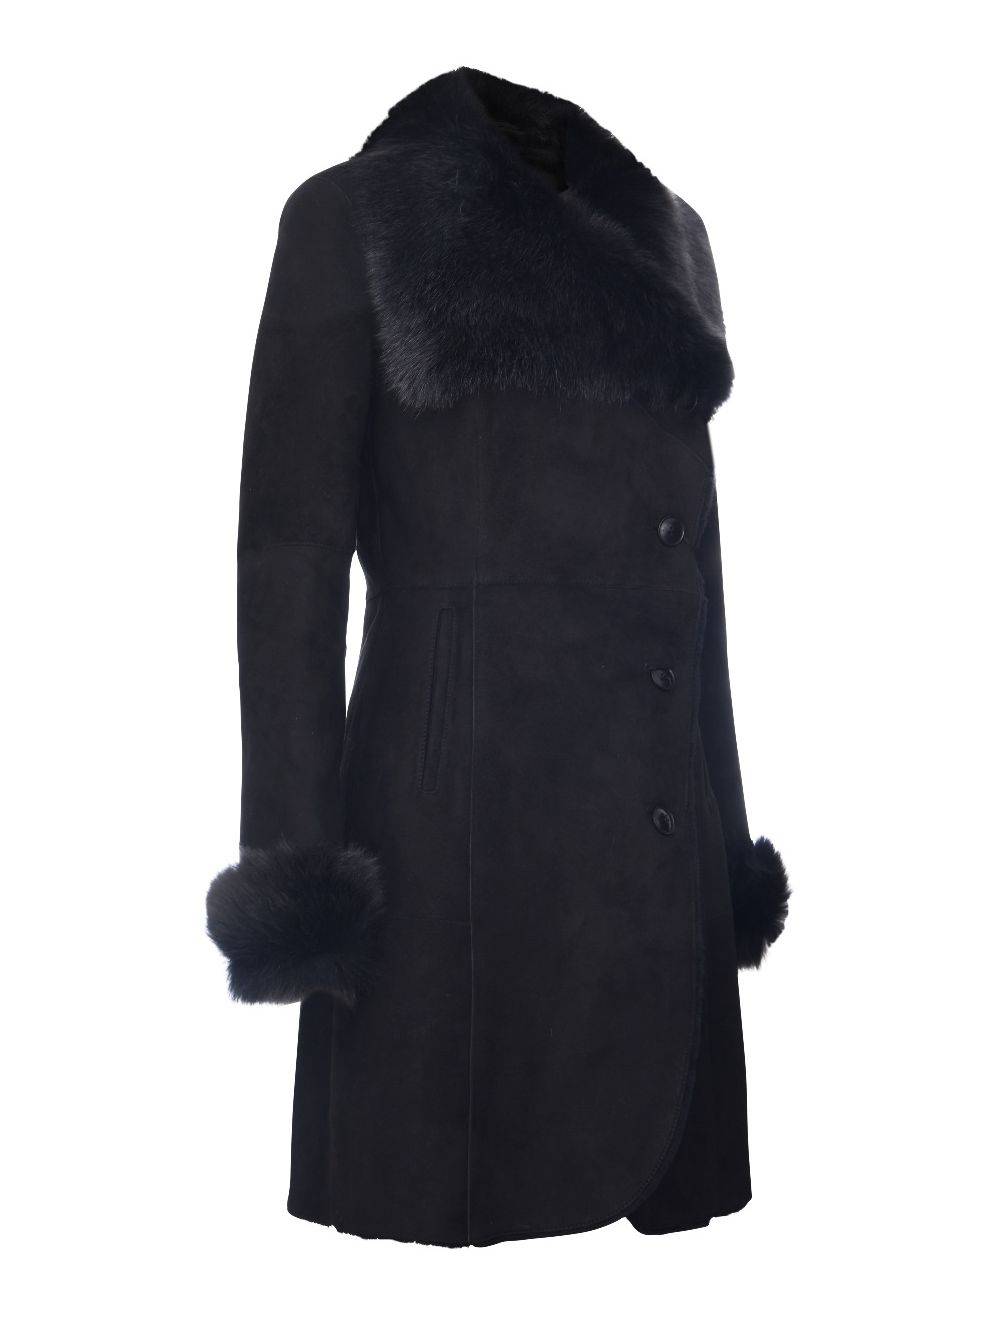 Ladies Black Suede Sheepskin Coat - Nikita for sale - Woodcock and Cavendish